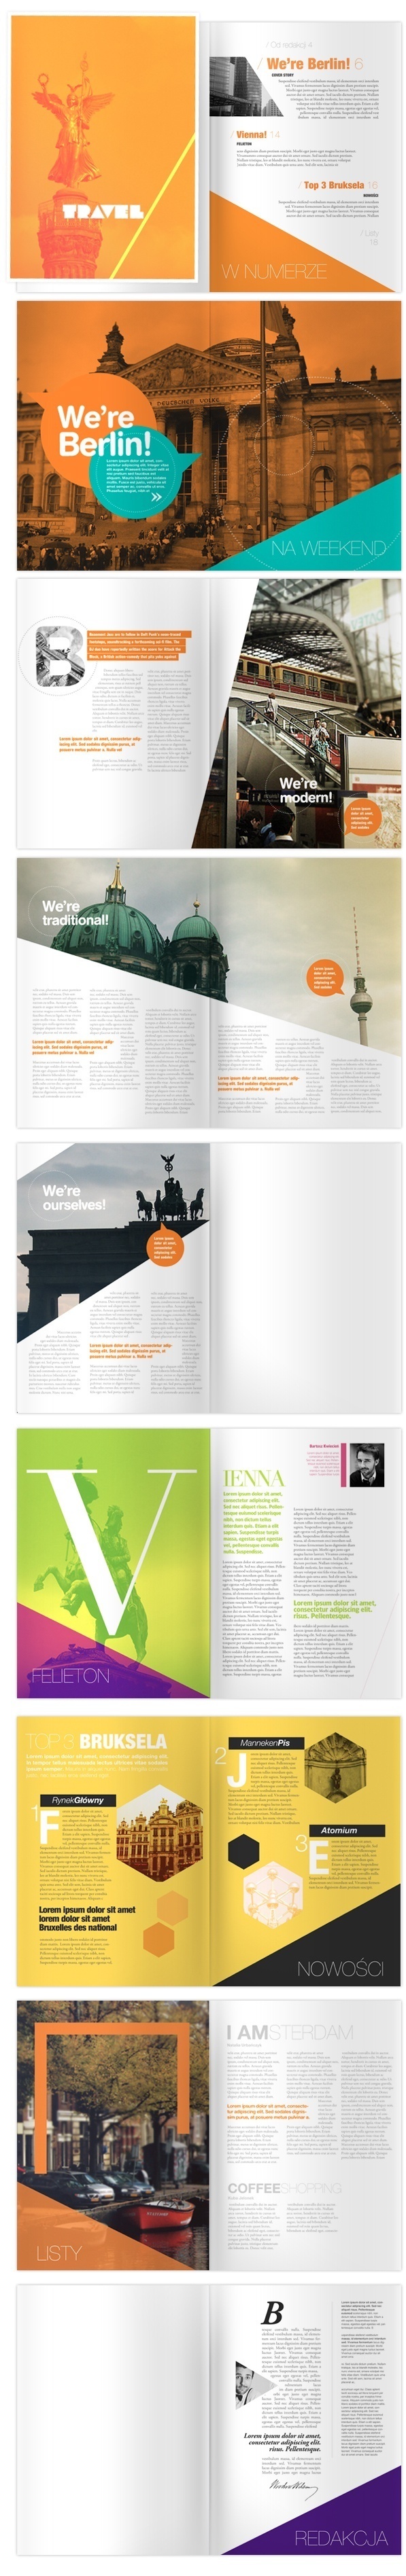 TRAVEL Magazine #layout #design #berlin #color_blocks #orange